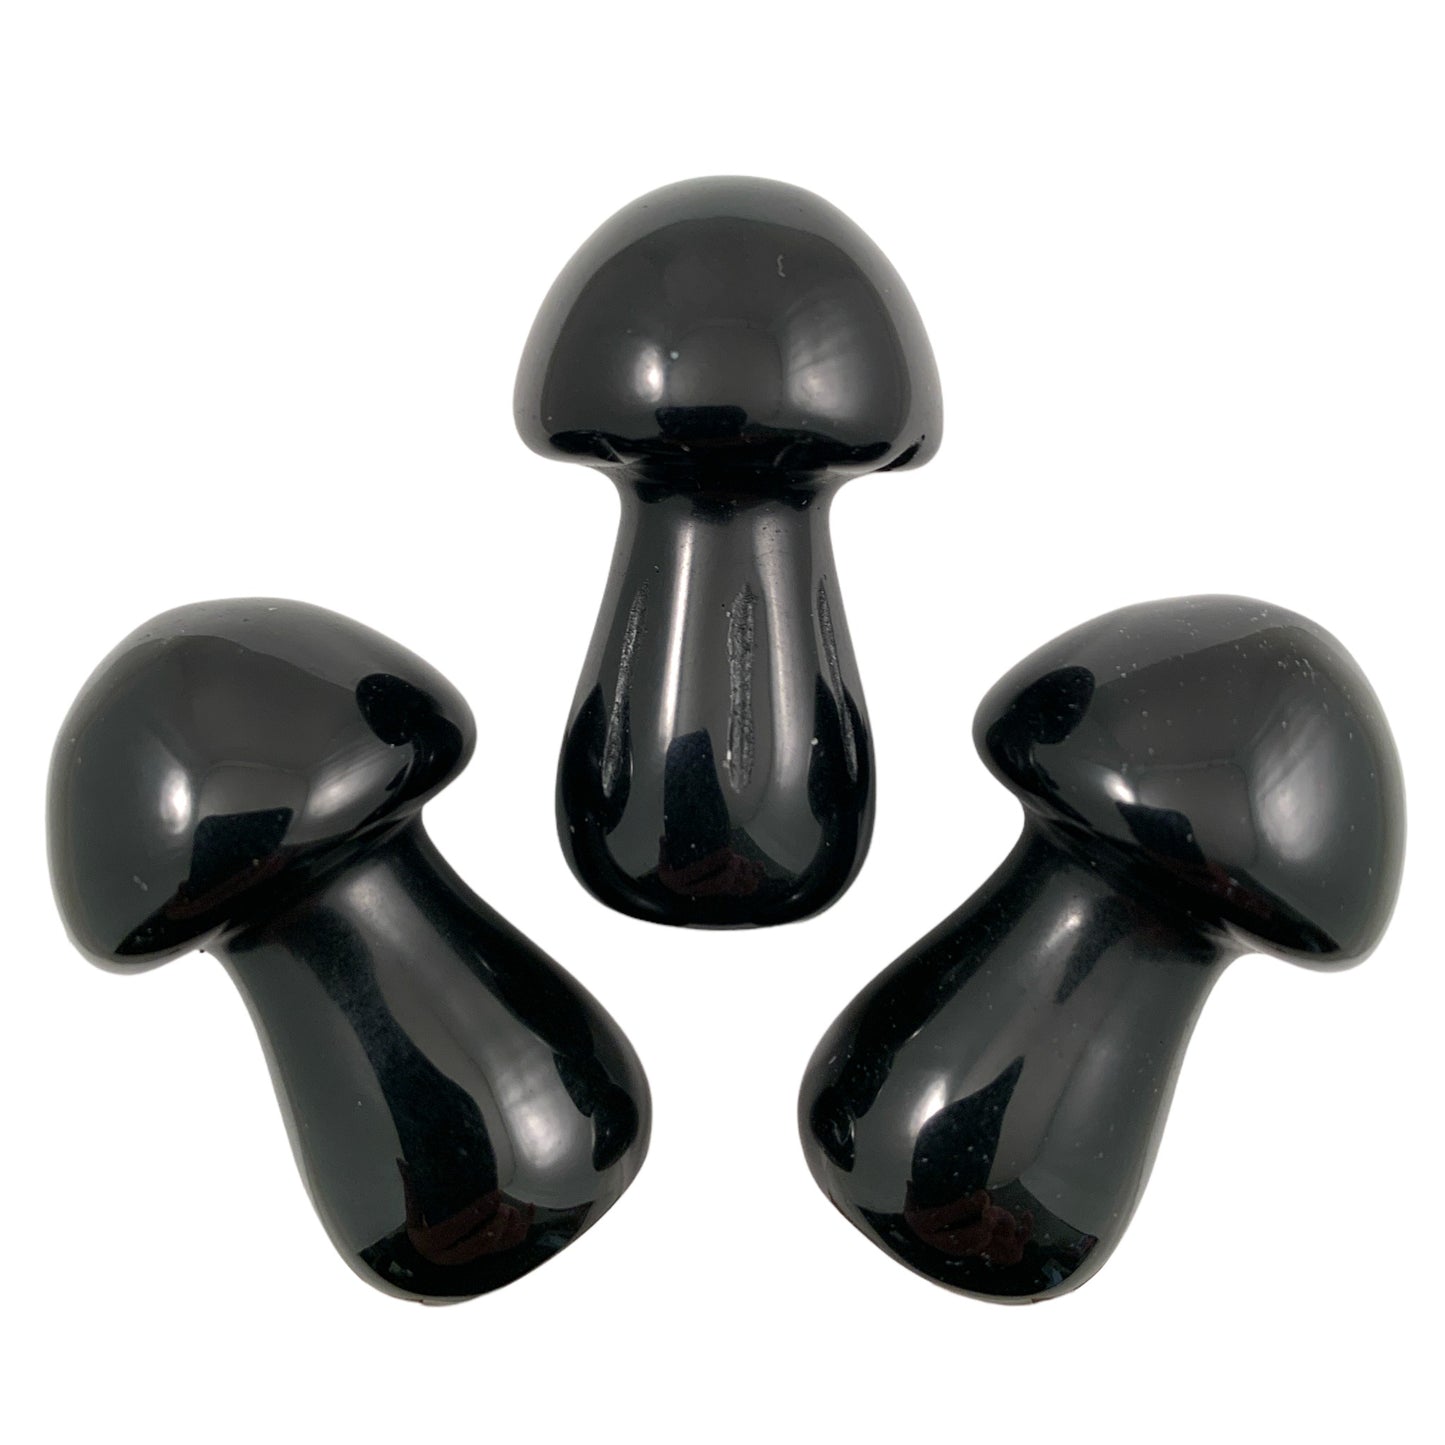 Mushrooms SMALL Black Obsidian - 35mm - Price Each - China - NEW822